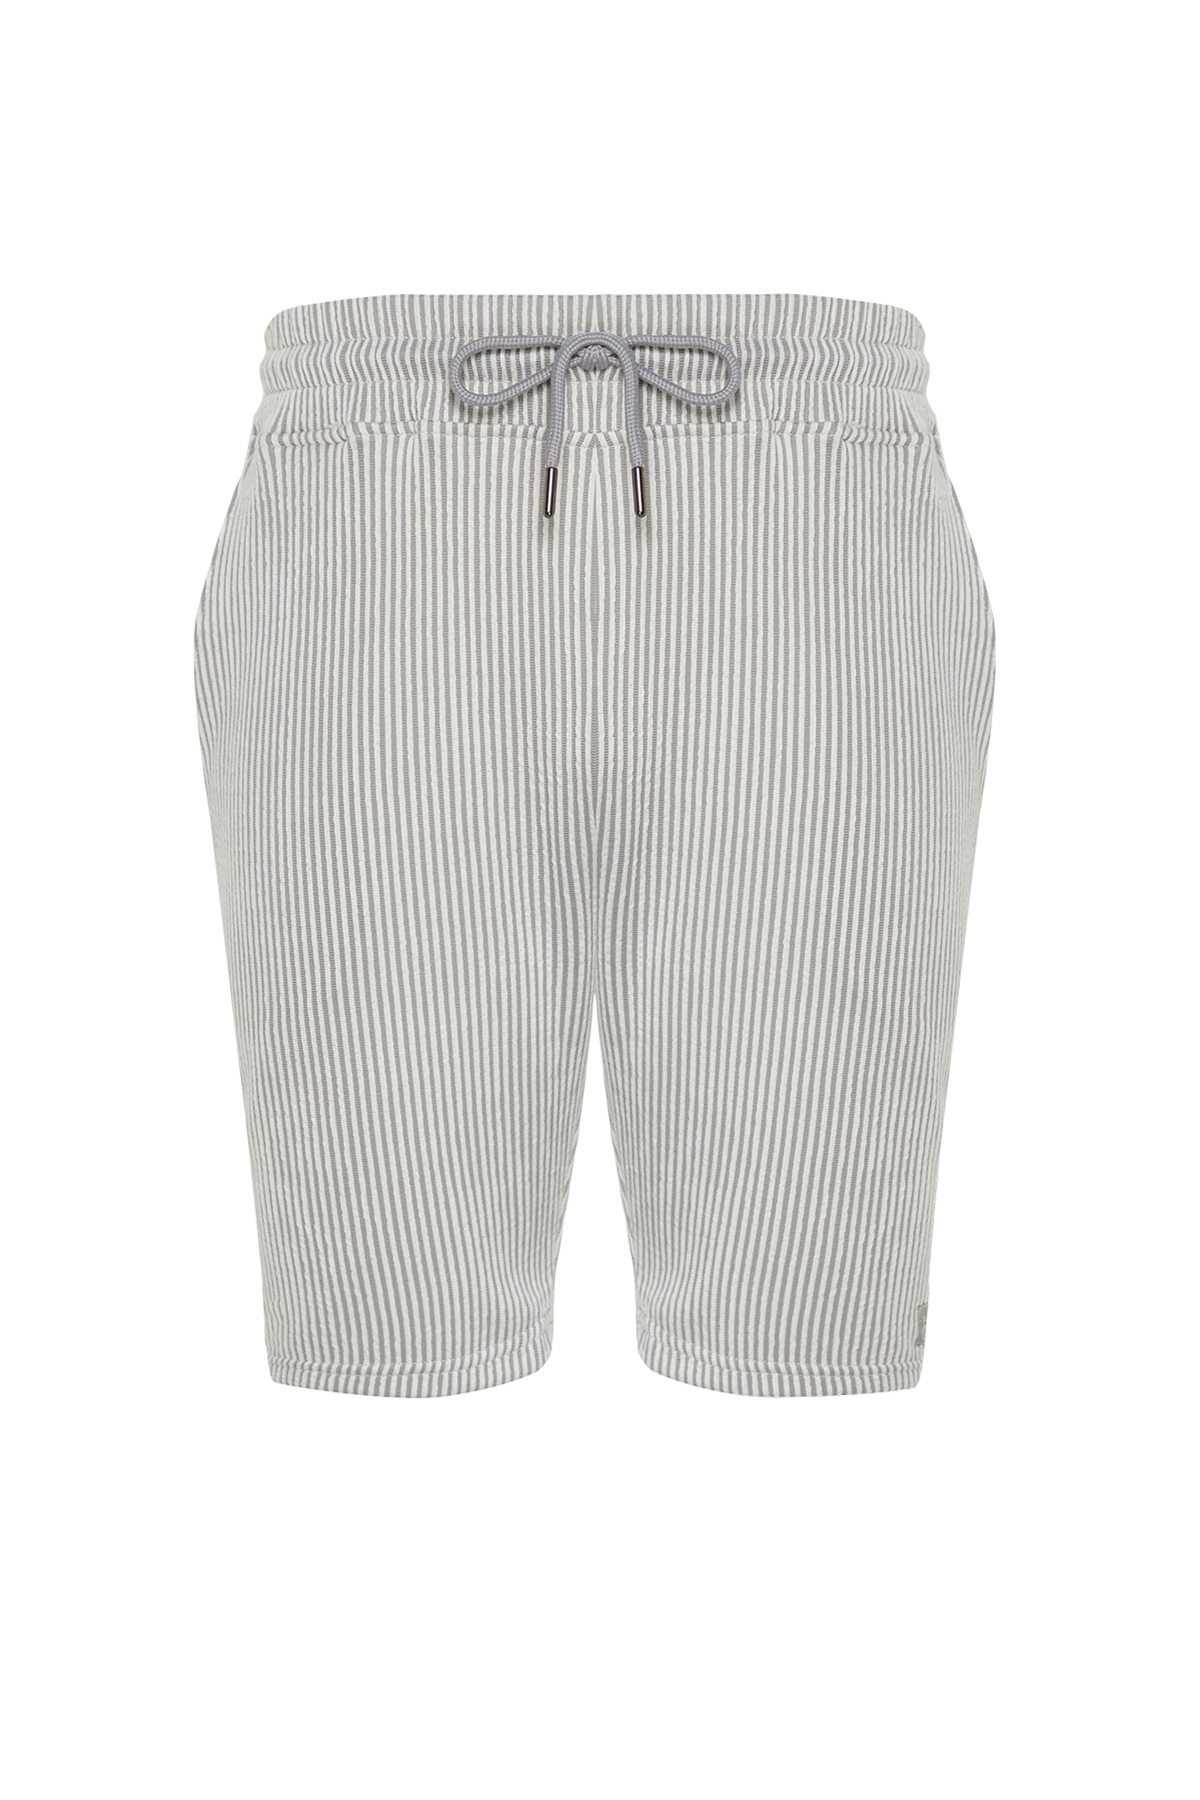 Trendyol Gray Striped Regular Cut Shorts